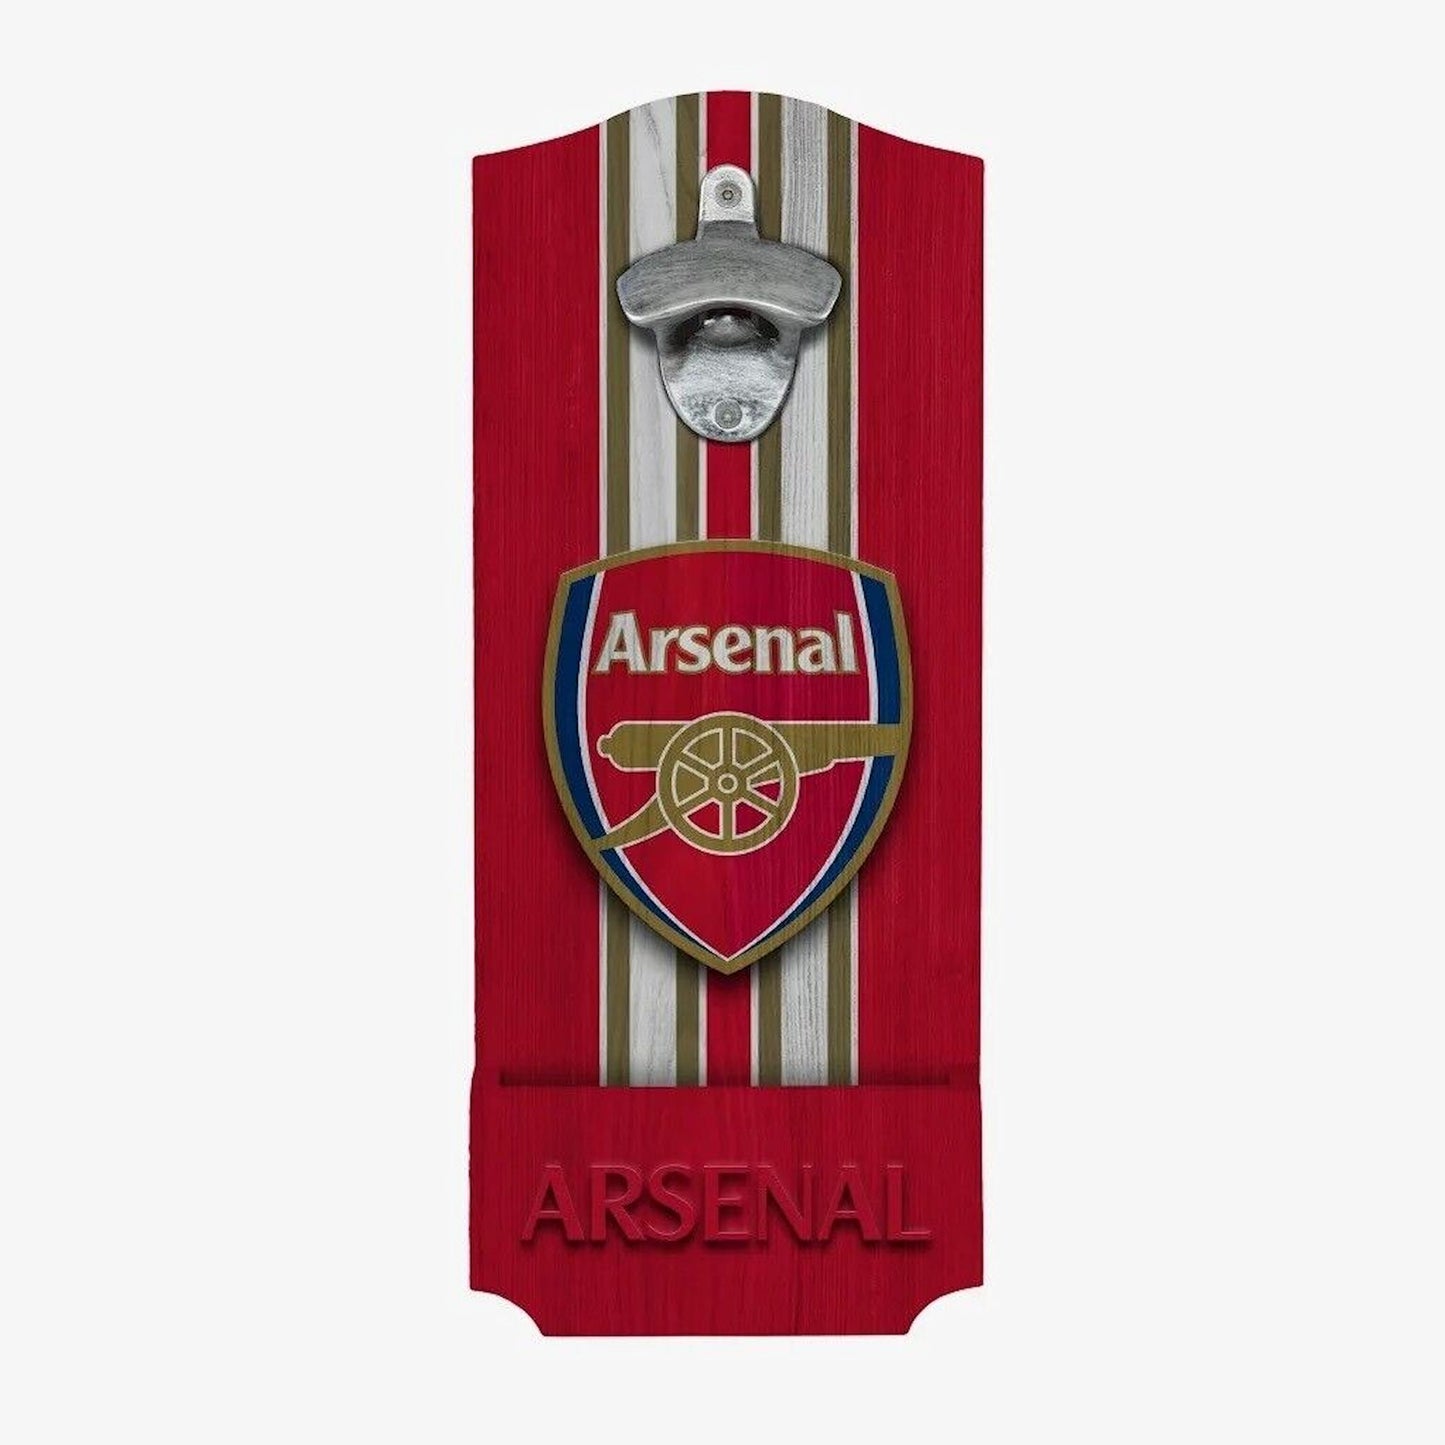 Arsenal Soccer Club Wooden Bottle Opener With Built-In Cap Catcher